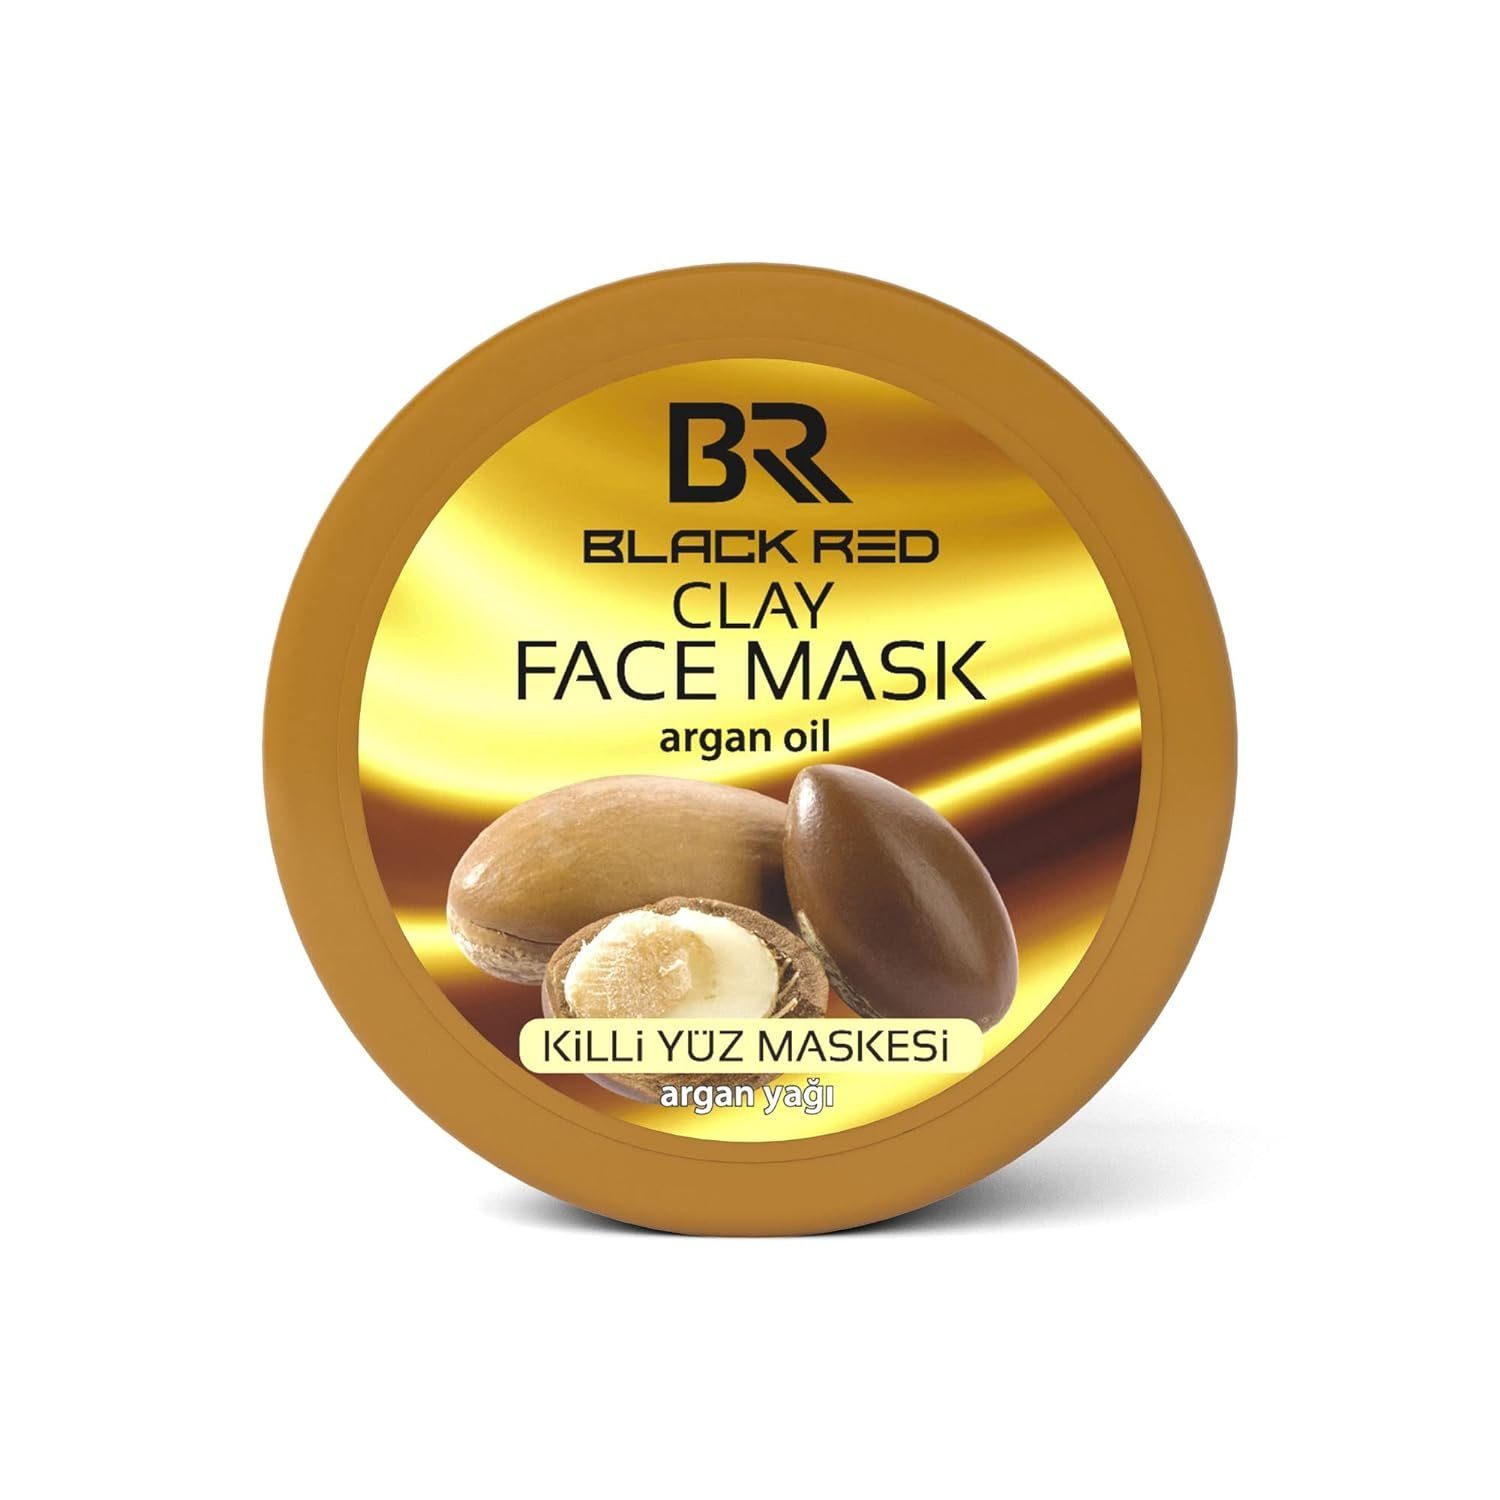 Red Black Oil Face & Kozmetik Argan Dora Gesichtsmaske Mask 400g Clay